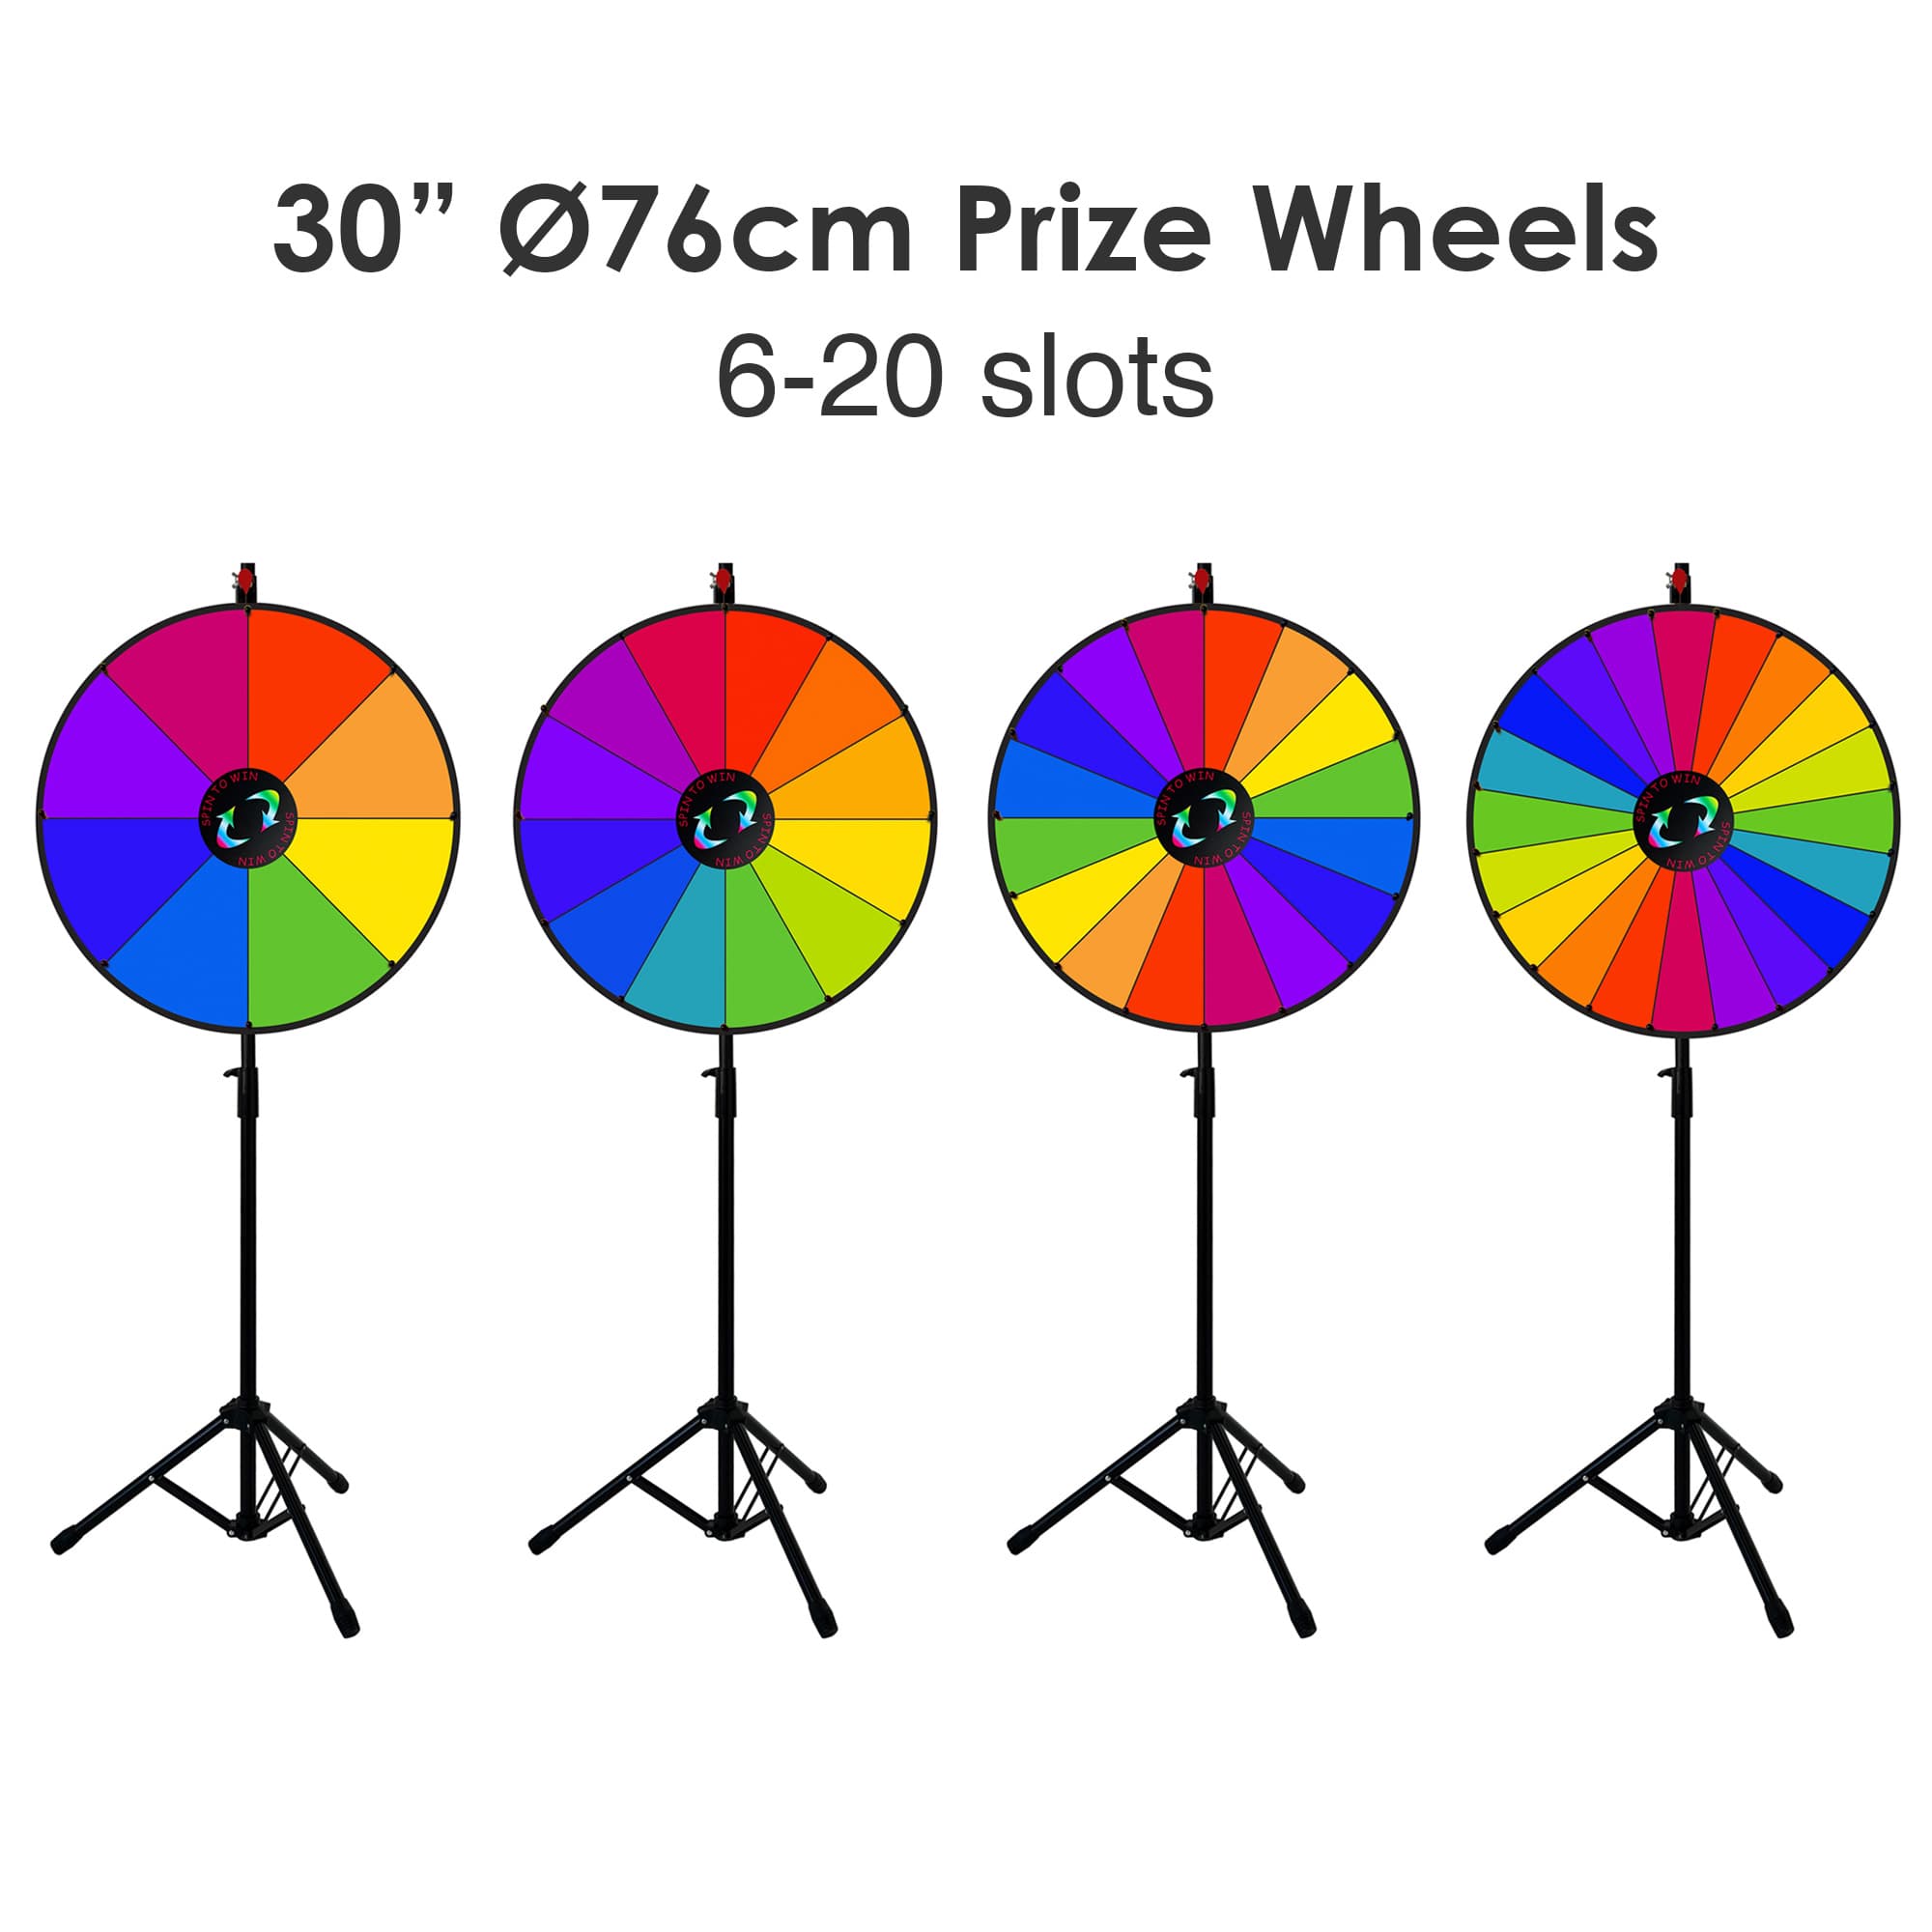 Dry-wipe Rainbow Spinning Wheel Game 